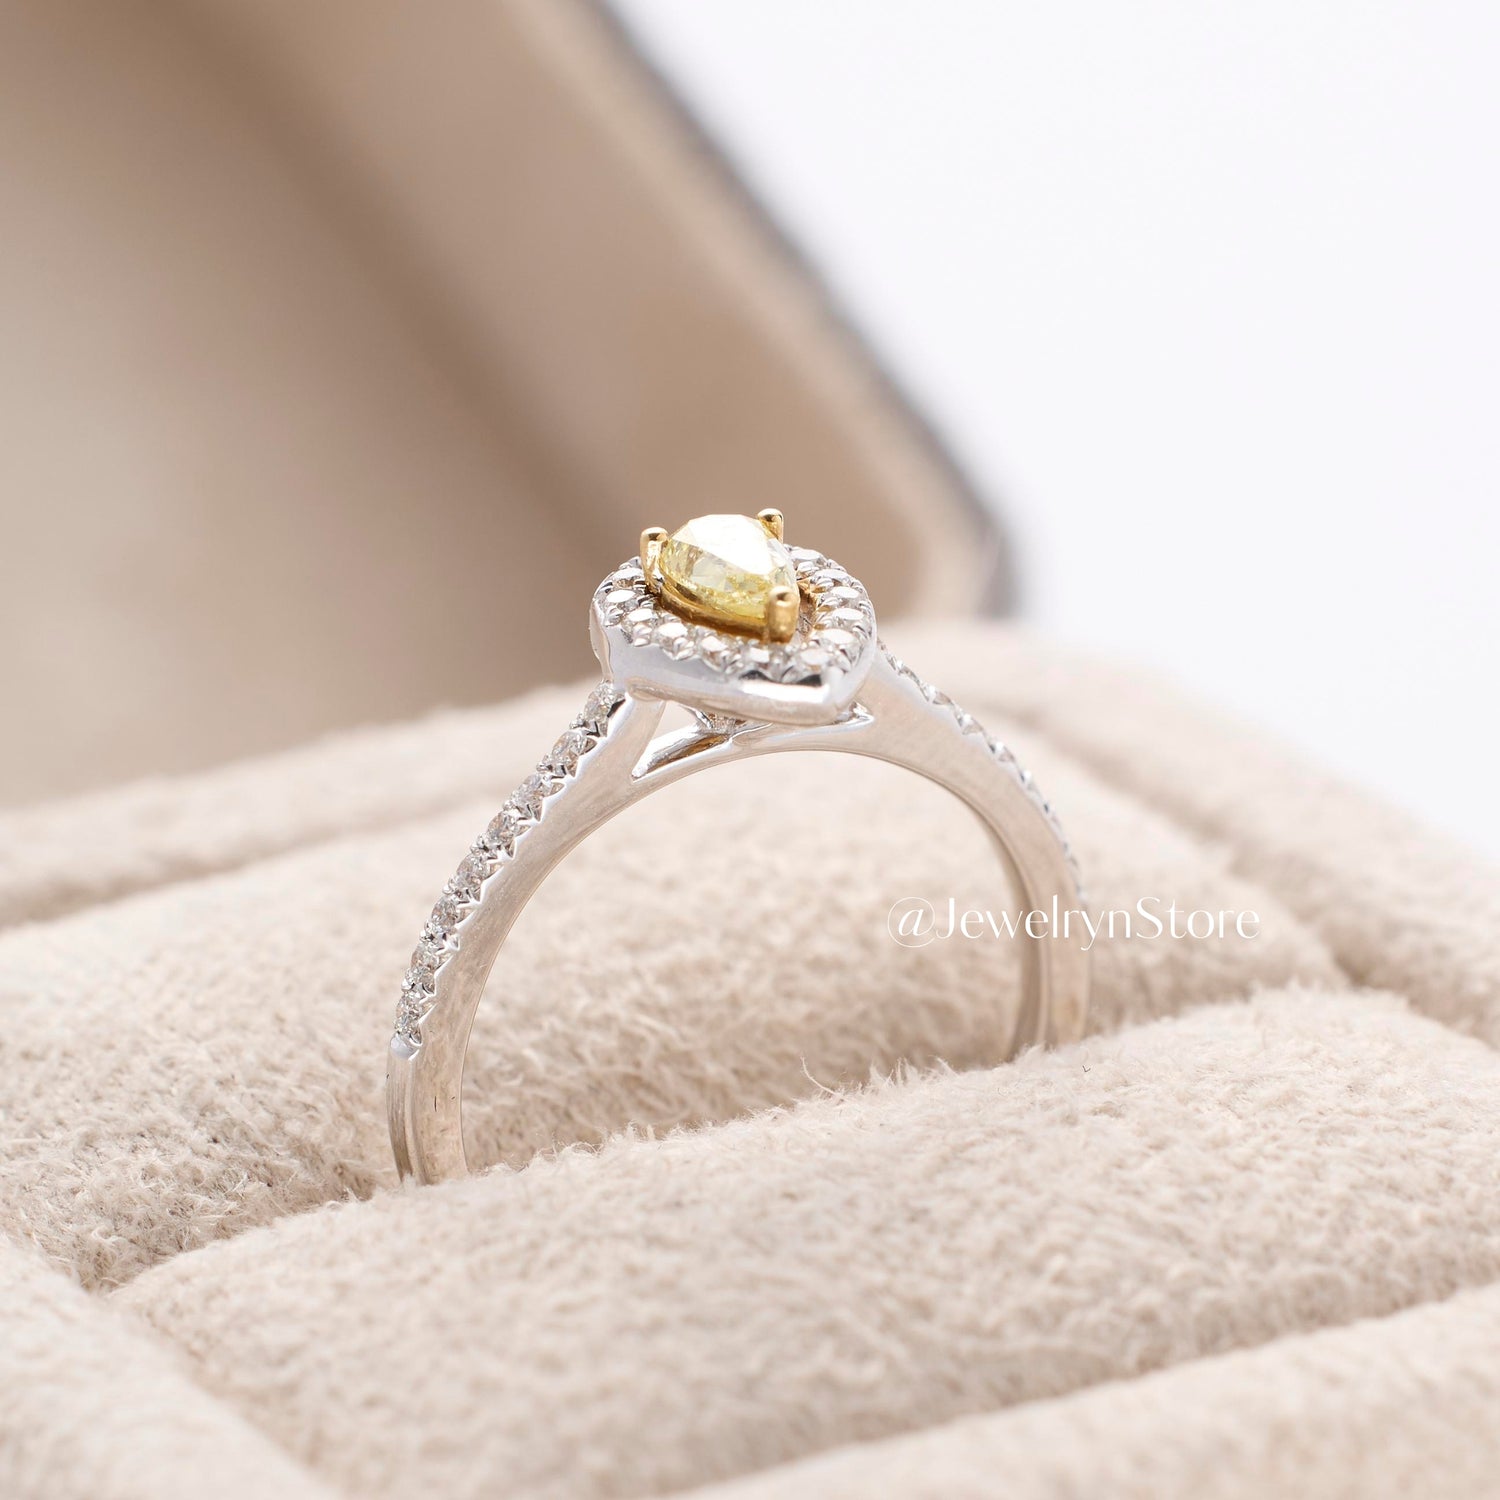 Pear-shpaed Yellow Diamond Engagement Ring